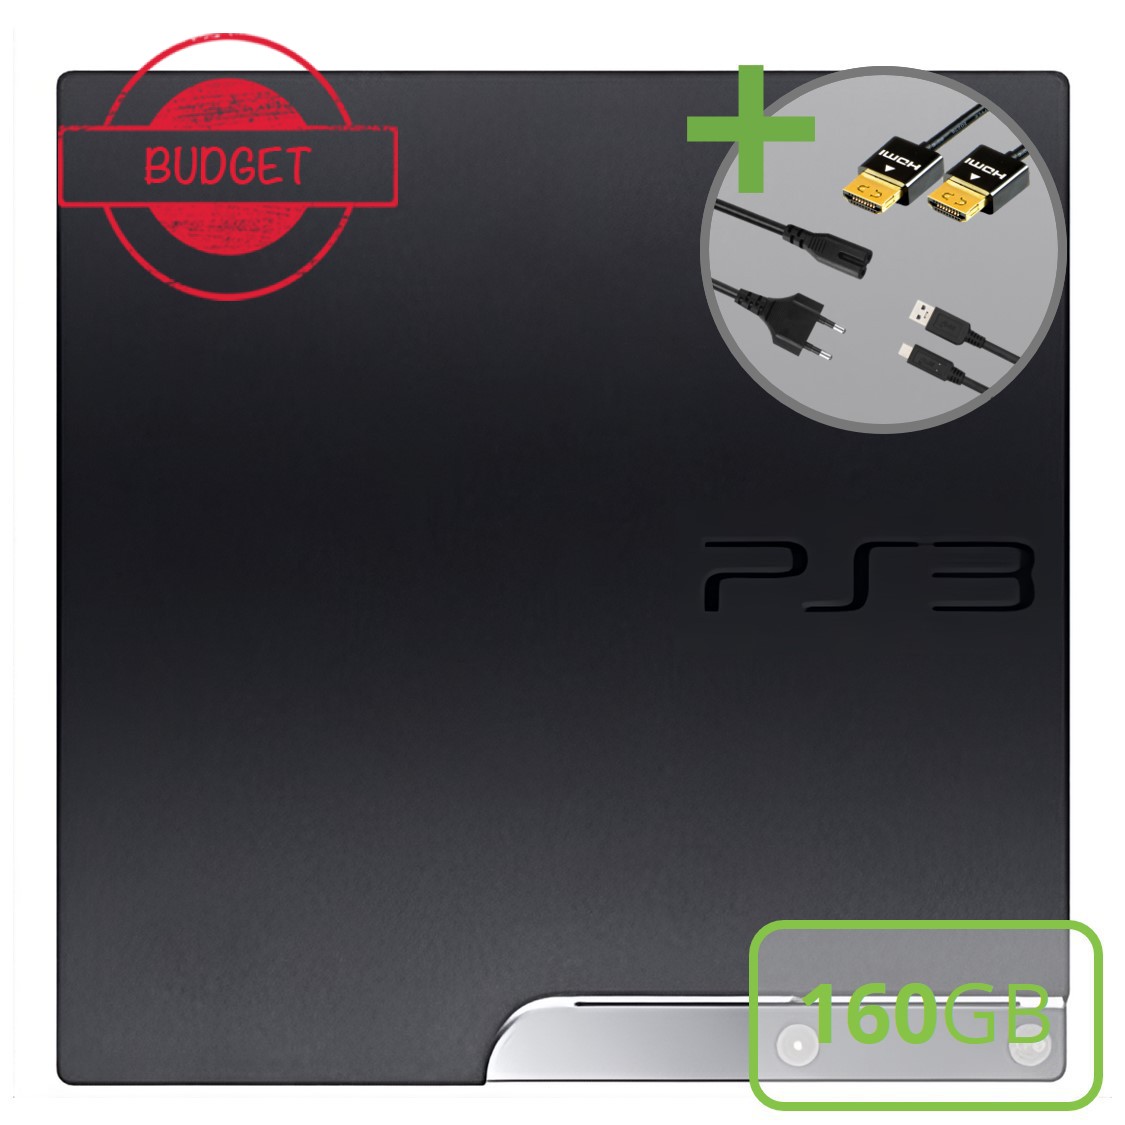 Sony PlayStation 3 Slim (160GB) Starter Pack - DualShock Edition - Budget - Playstation 3 Hardware - 3